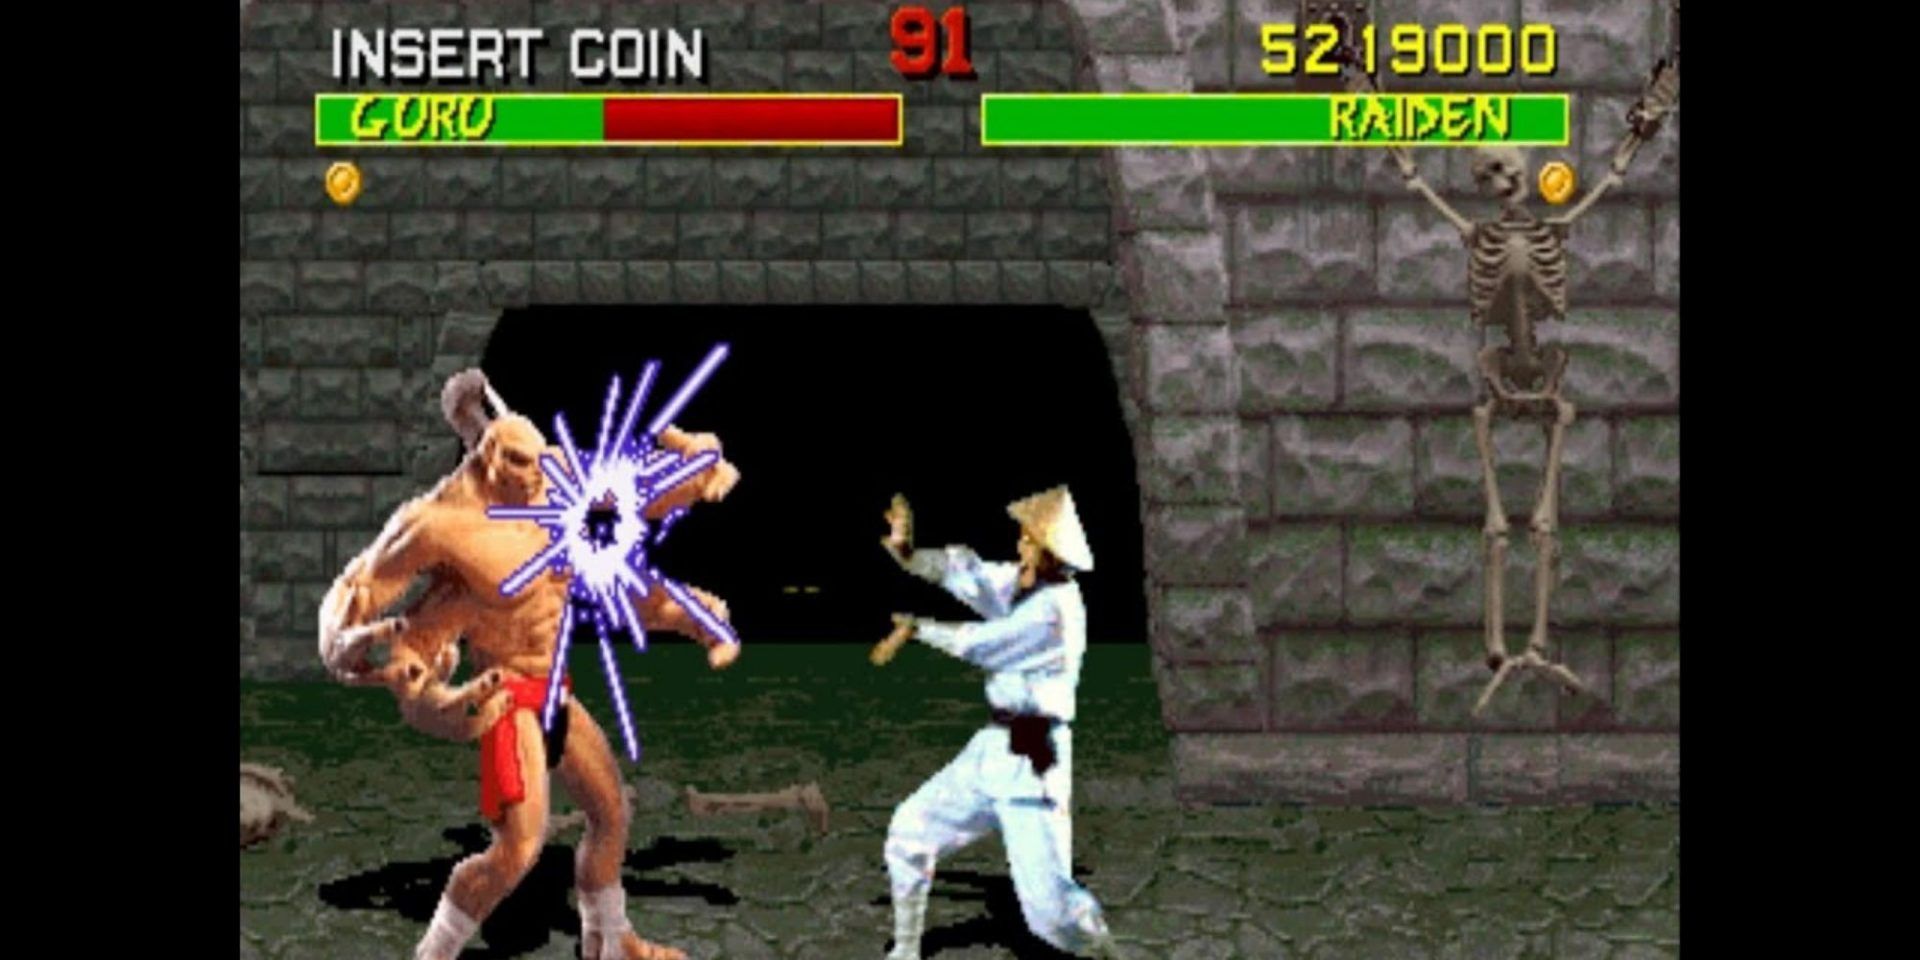 Raiden hits Goro with a burst of lightning 